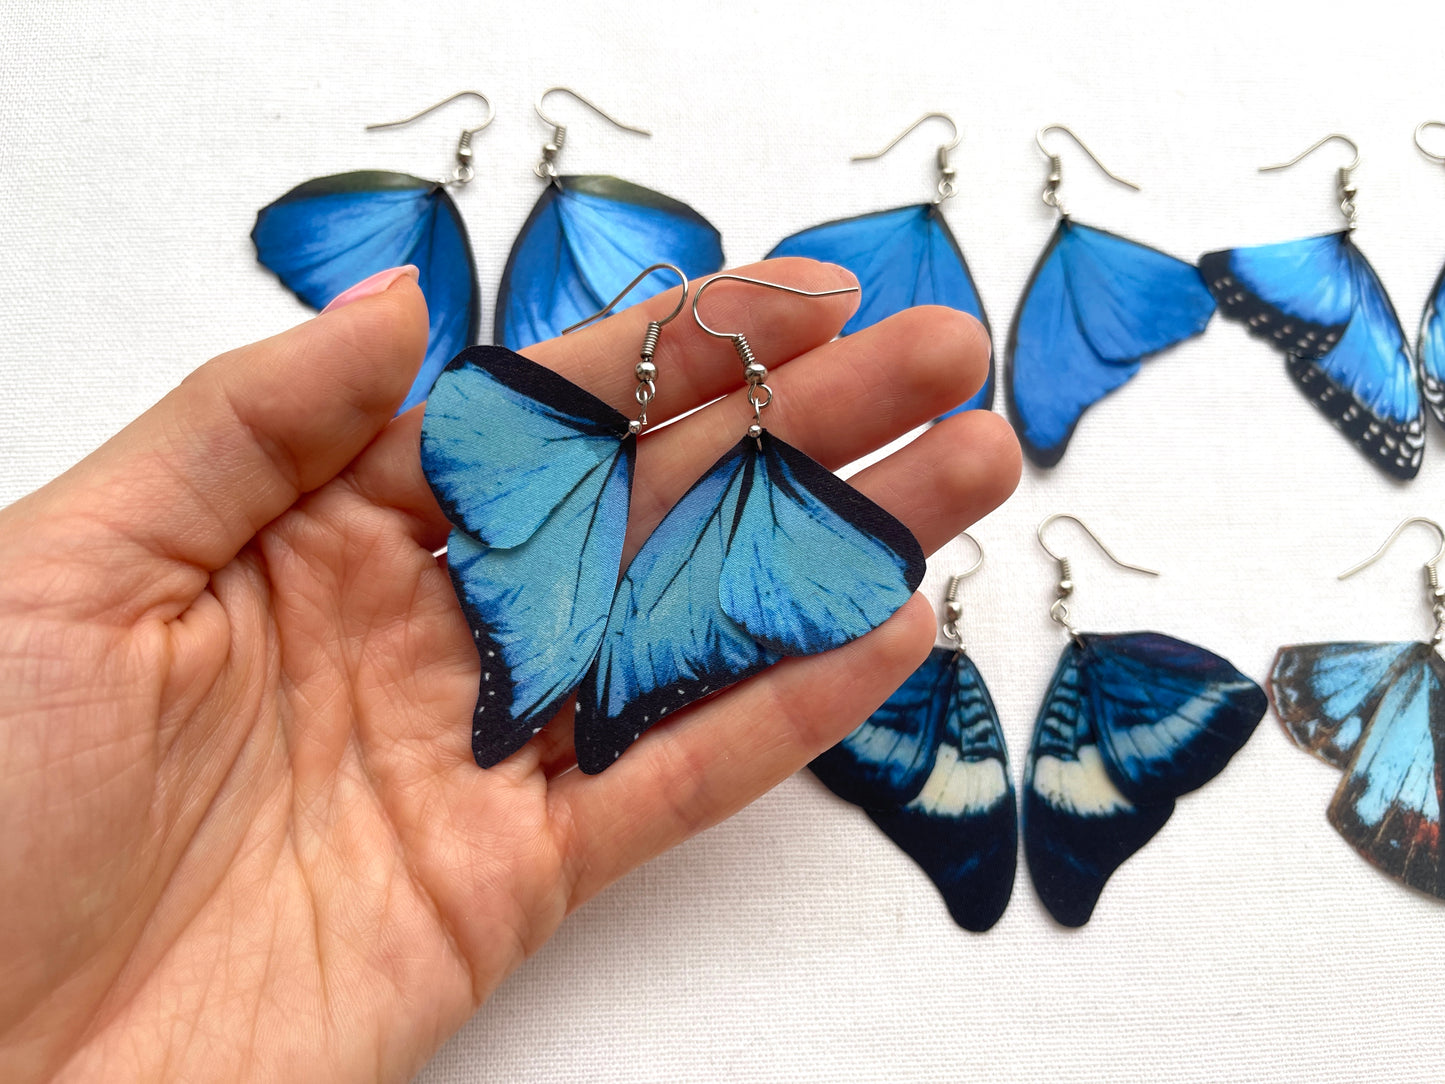 Watercolor butterfly wing earrings in shades of blue